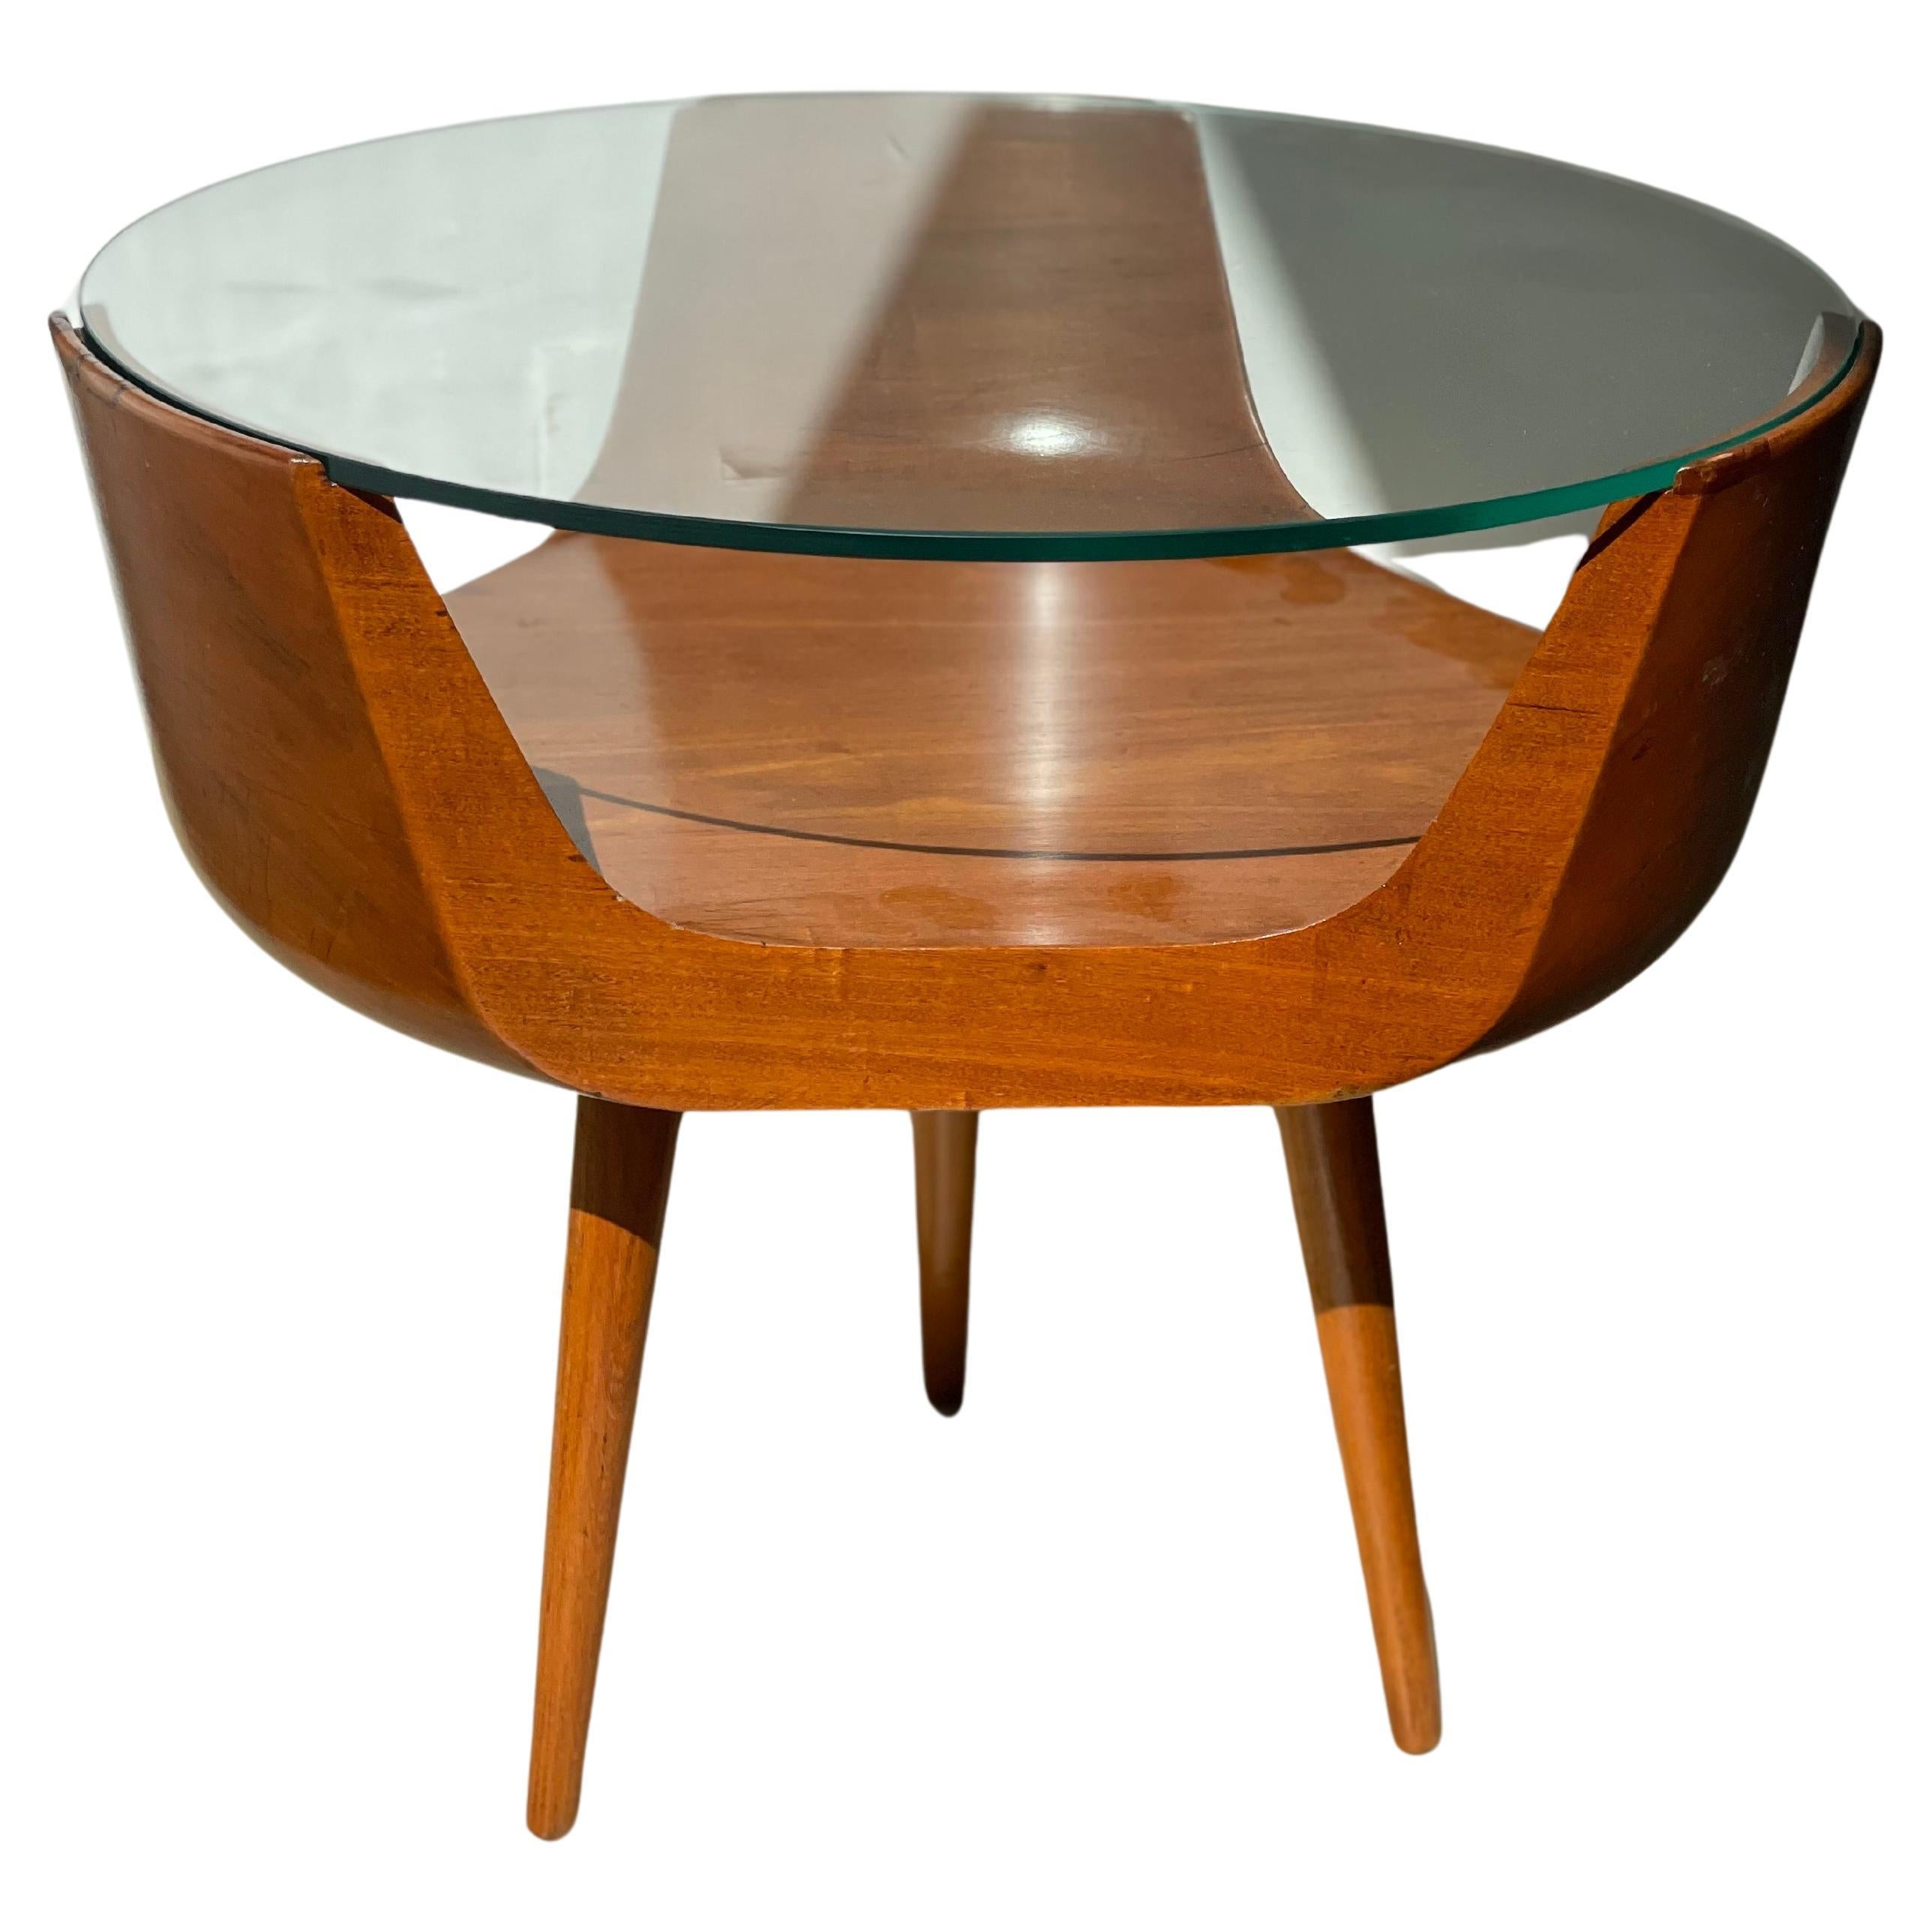 Carlo Hauner for Móveis Artesanal/Forma. Mid-Century Modern Side Table in Wood